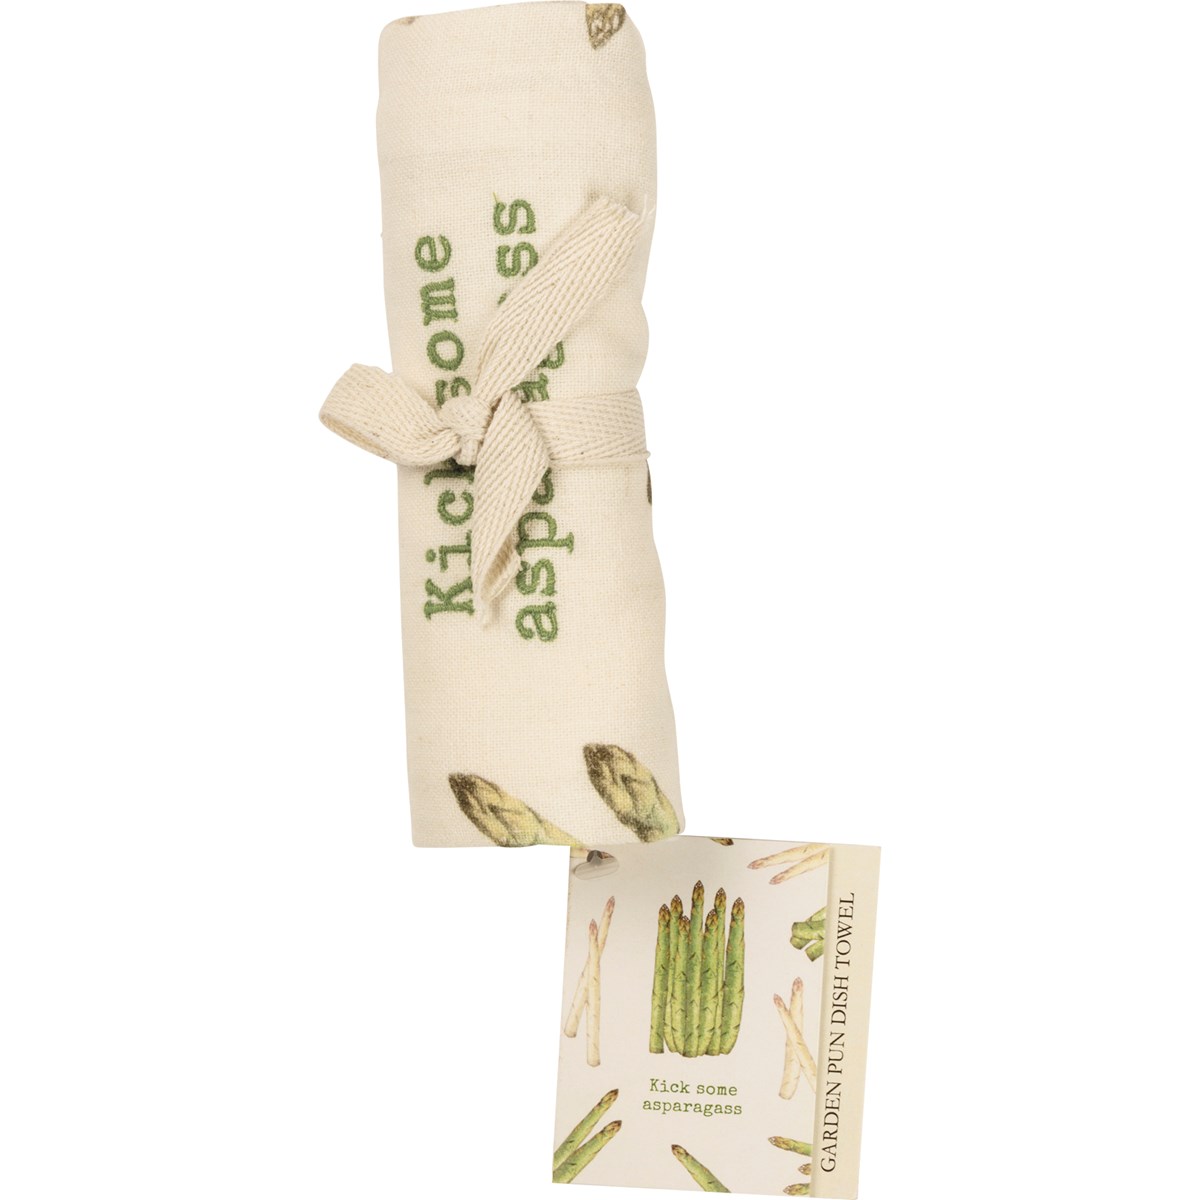 Kitchen Towel - Kick Some Asparagass - 18" x 28" - Cotton, Linen